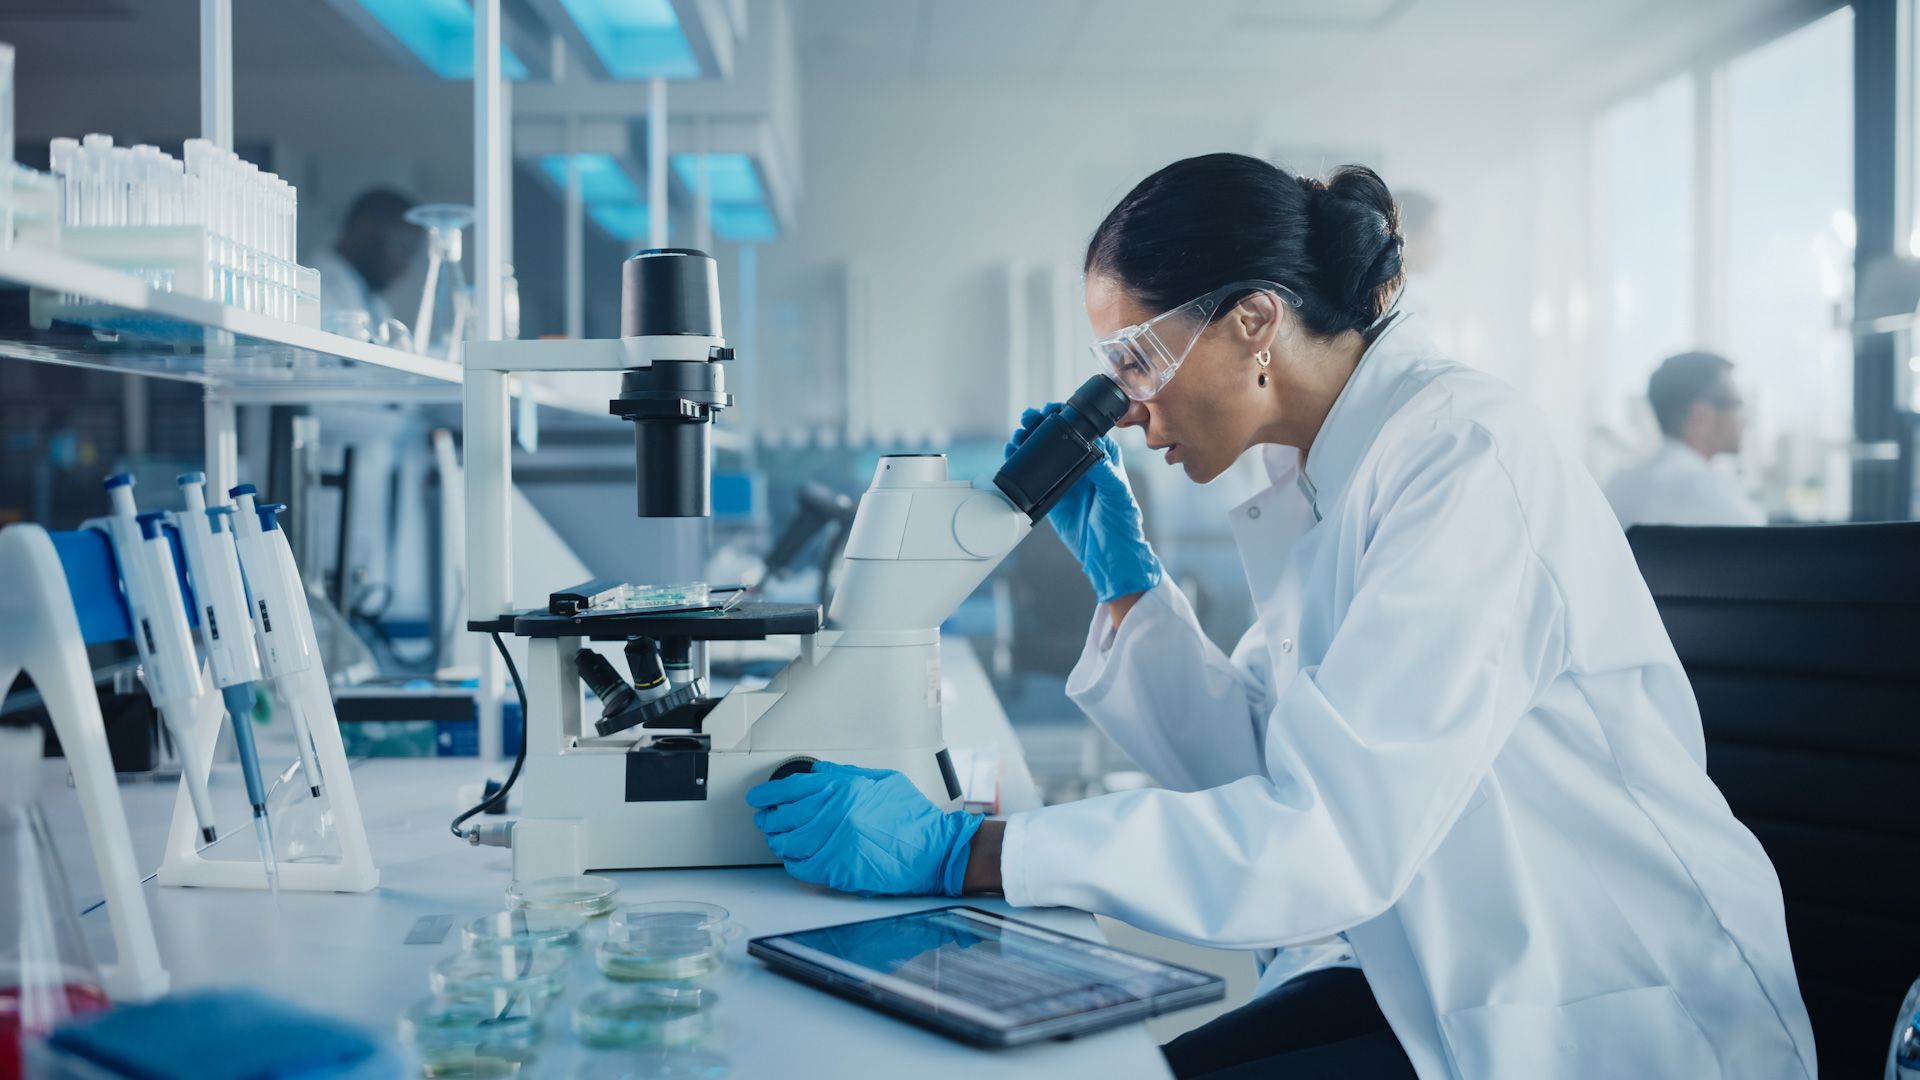 A female scientist looks through a microscope in a lab